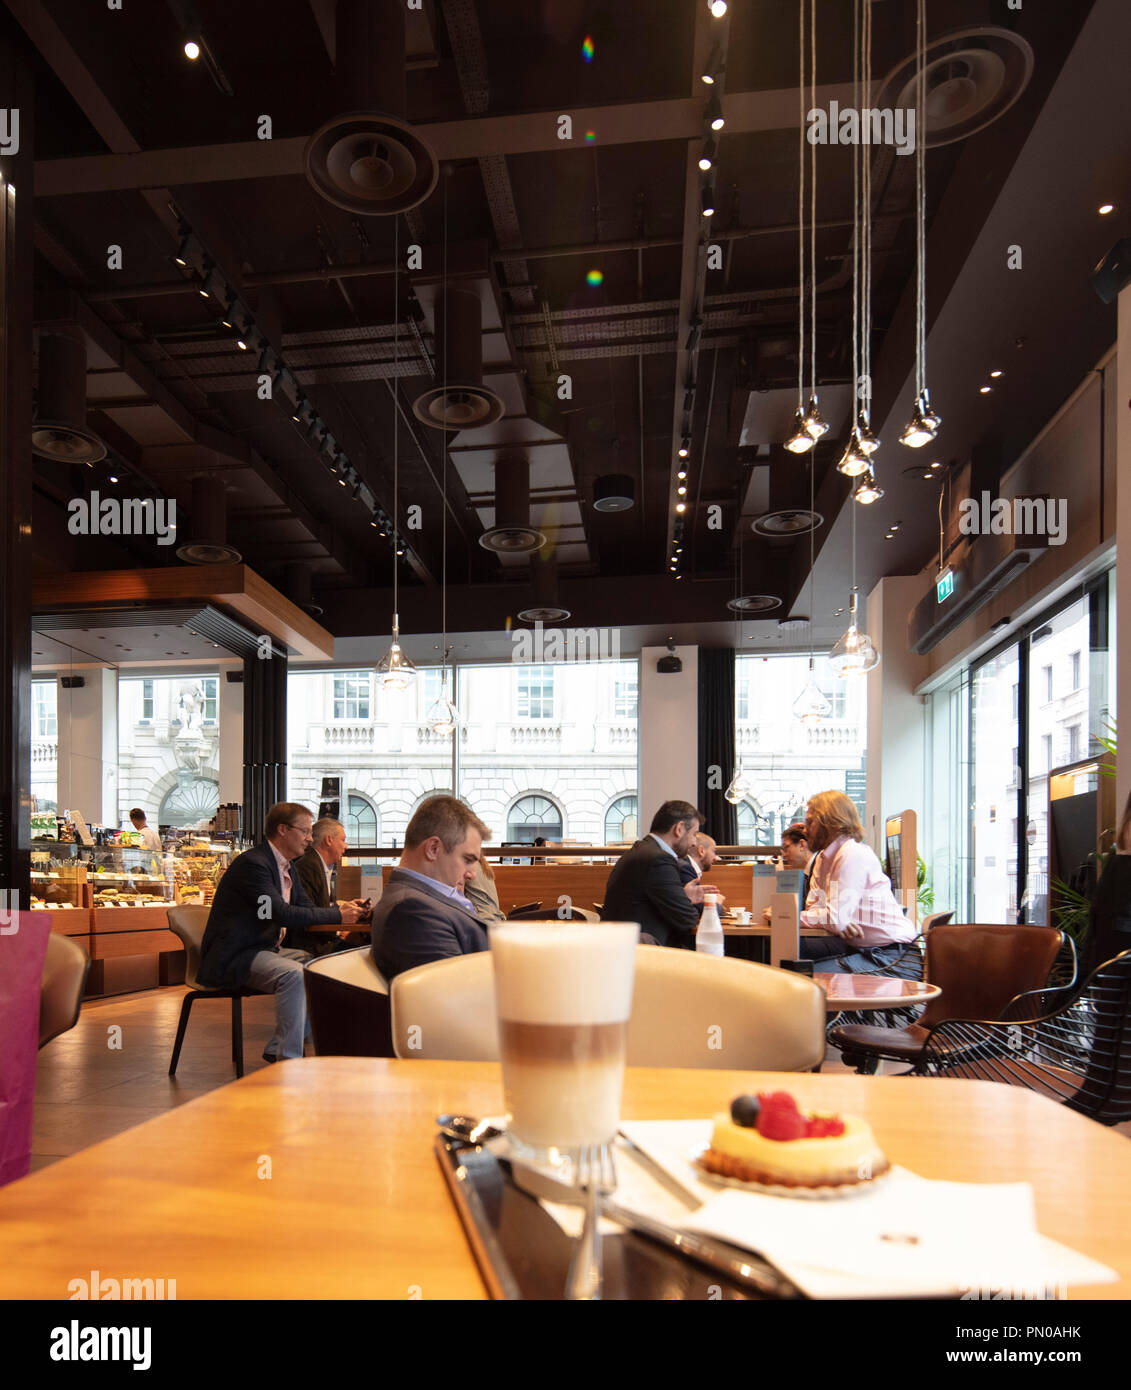 interior of Nespresso Cafe, 100 Cheapside, City of London, England, UK  Stock Photo - Alamy